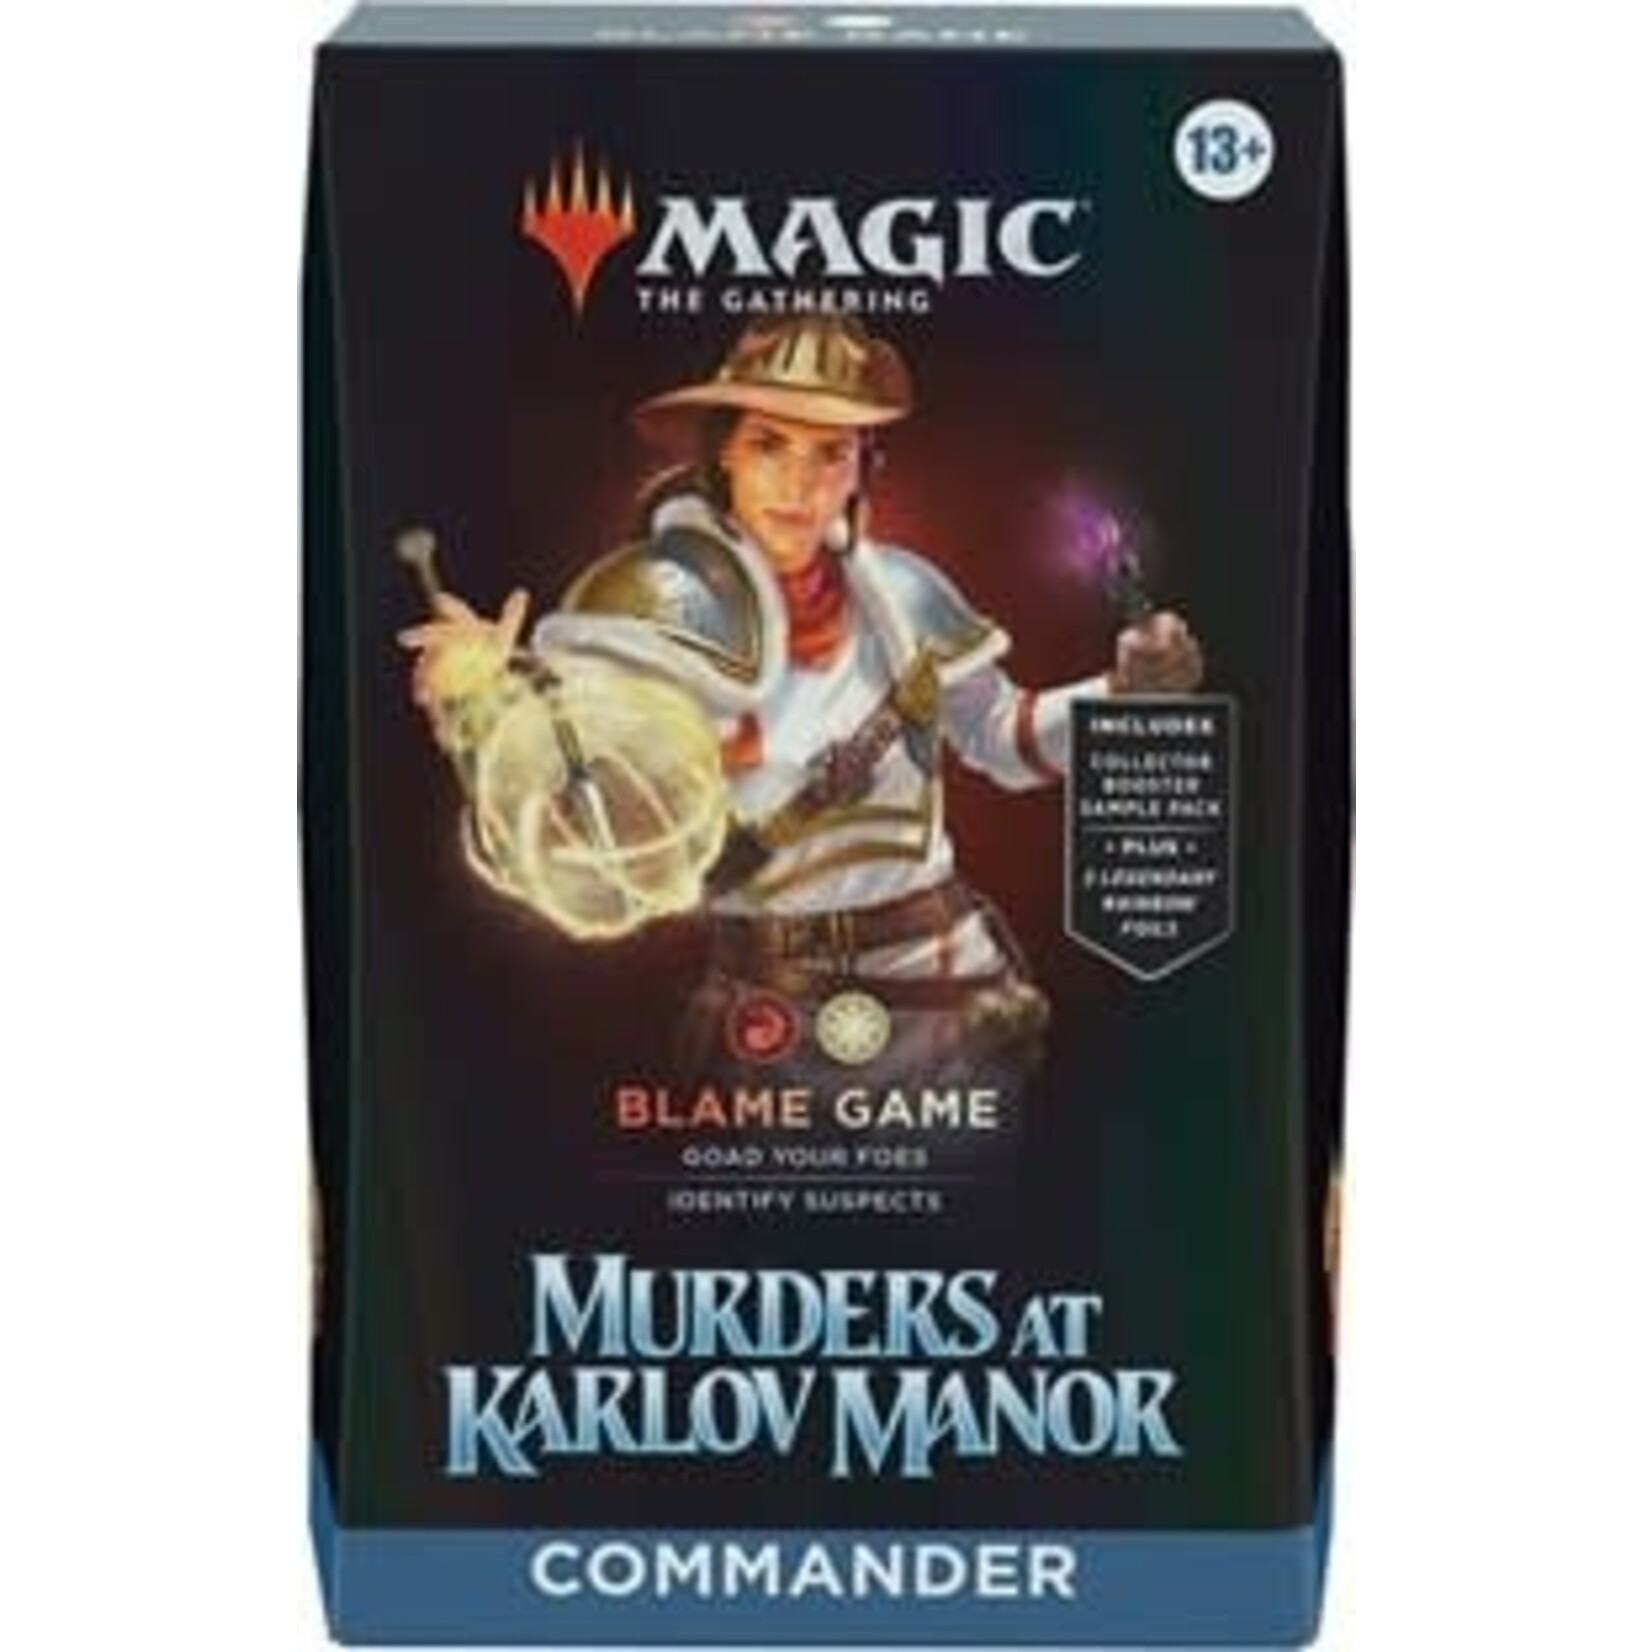 Magic MTG Murders at Karlov Manor Blame Game Commander deck